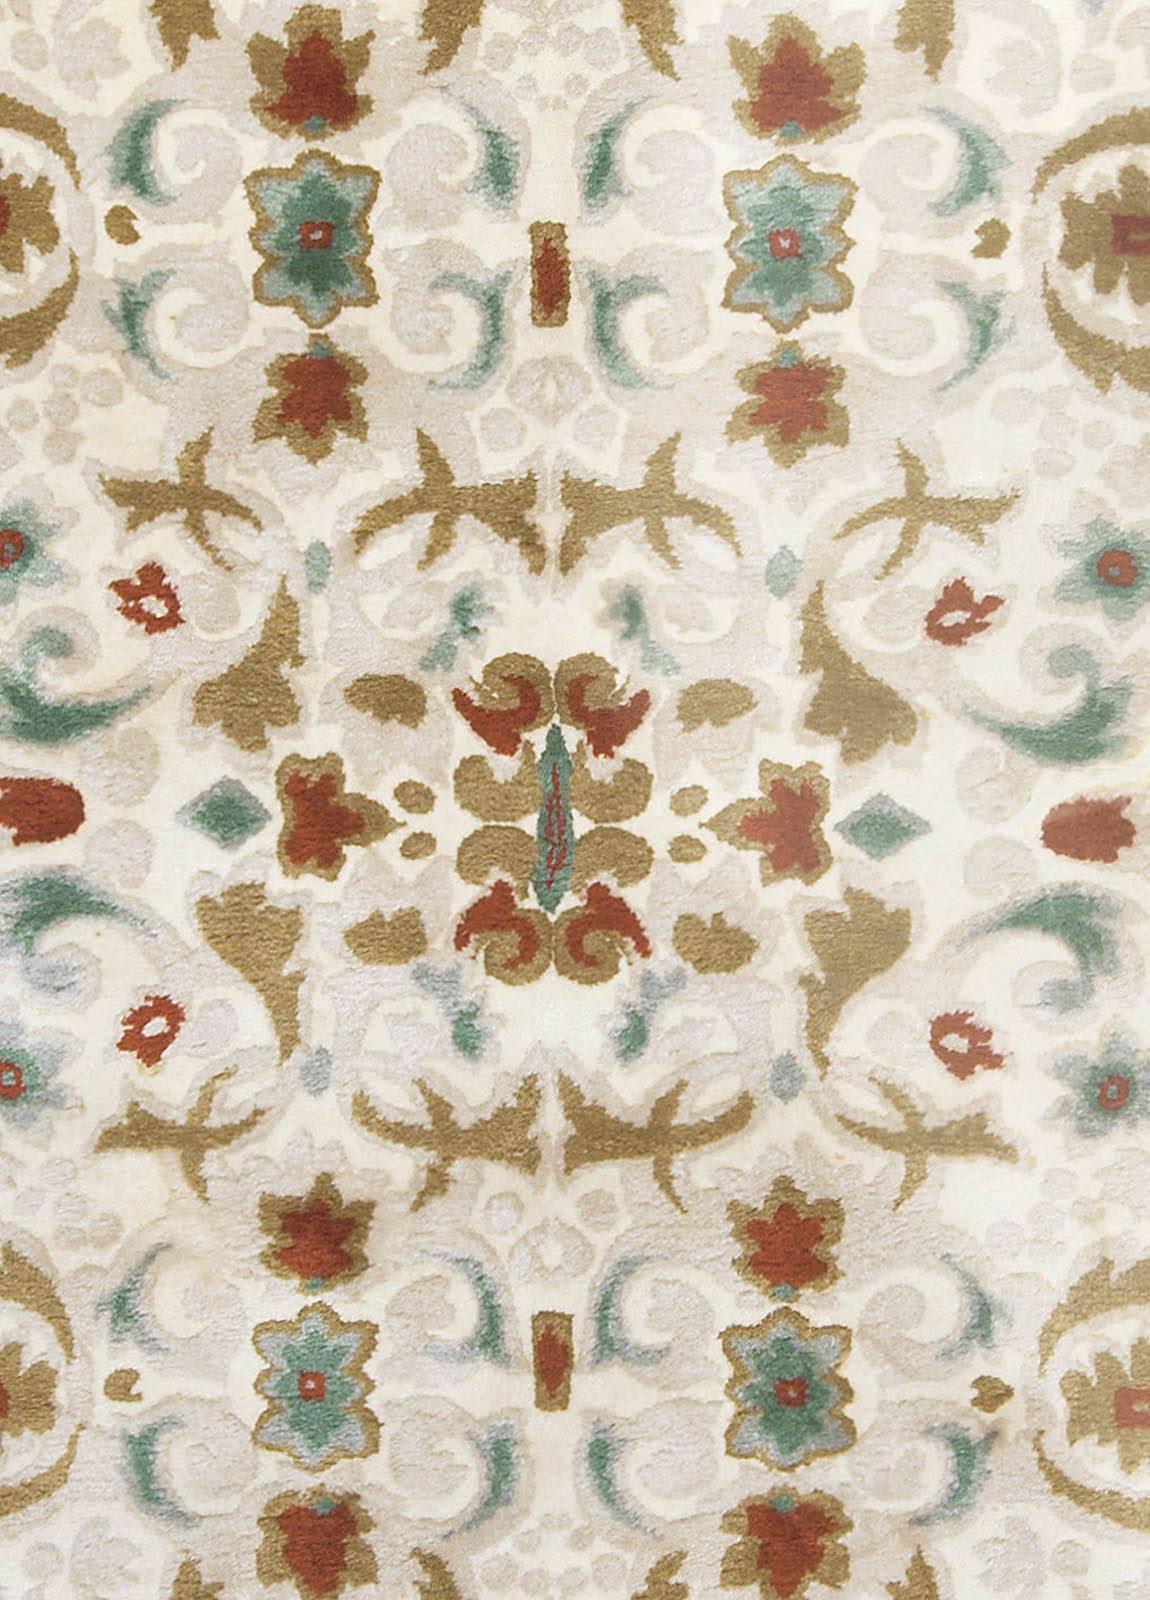 Mid-20th century French Art Deco white, brown, green handmade wool rug by Paule Leleu at Doris Leslie Blau
Size: 12'0